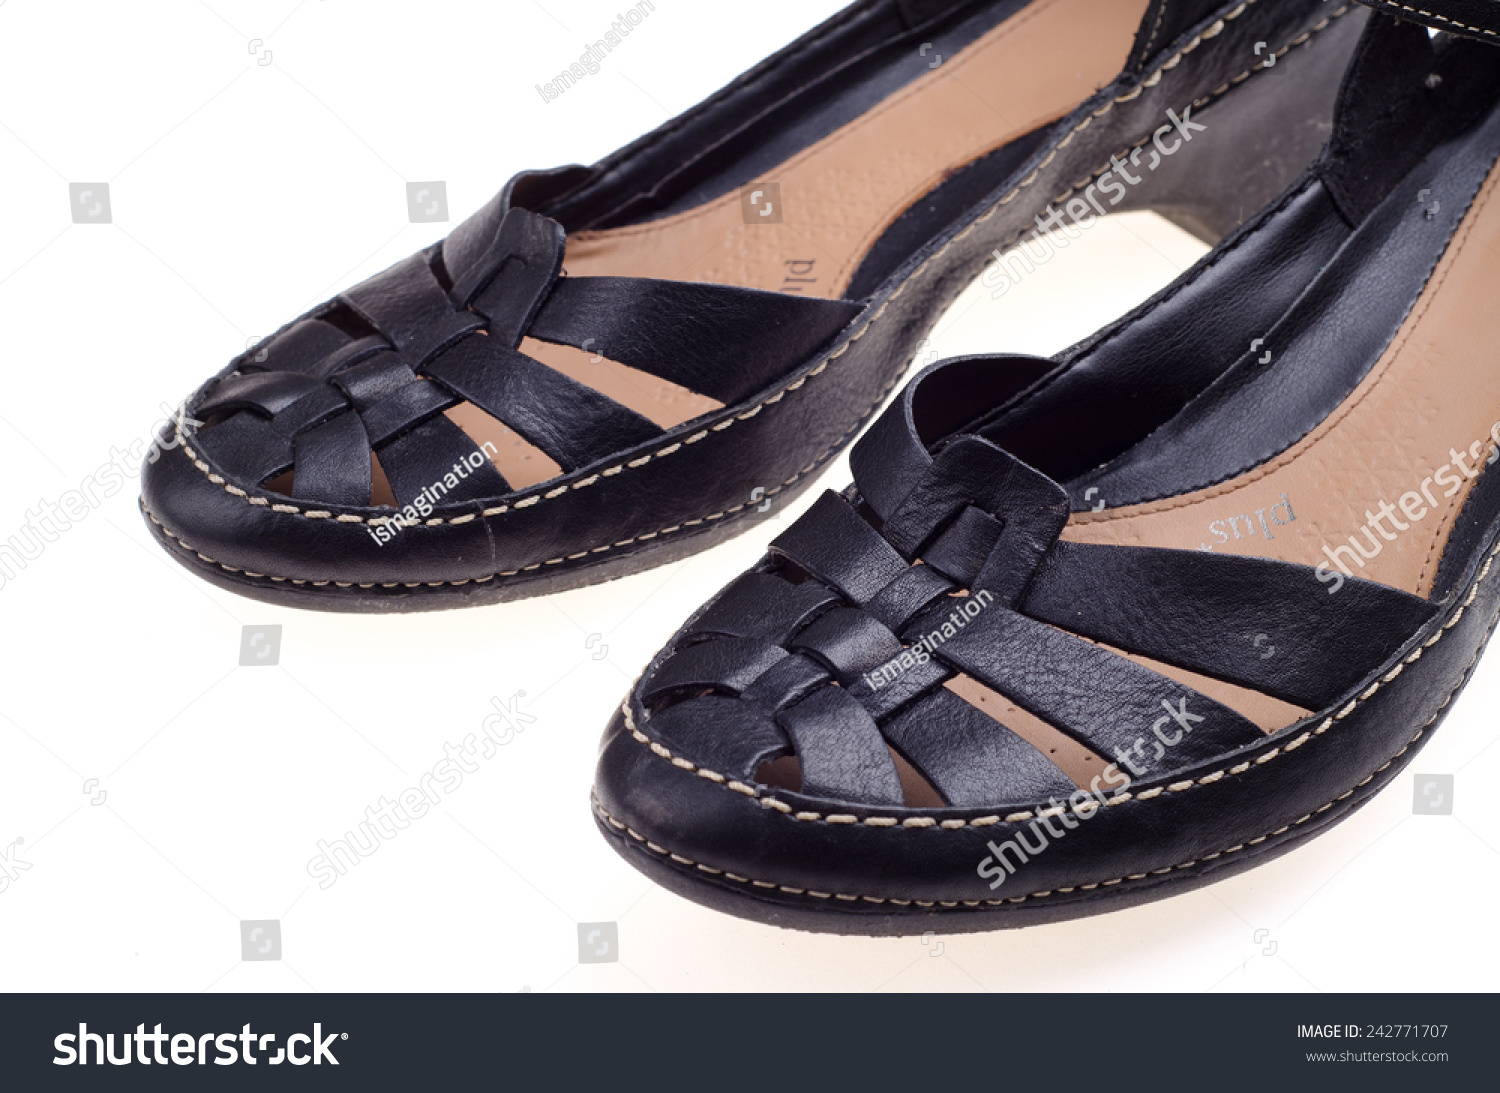 clarks womens sandals 2015